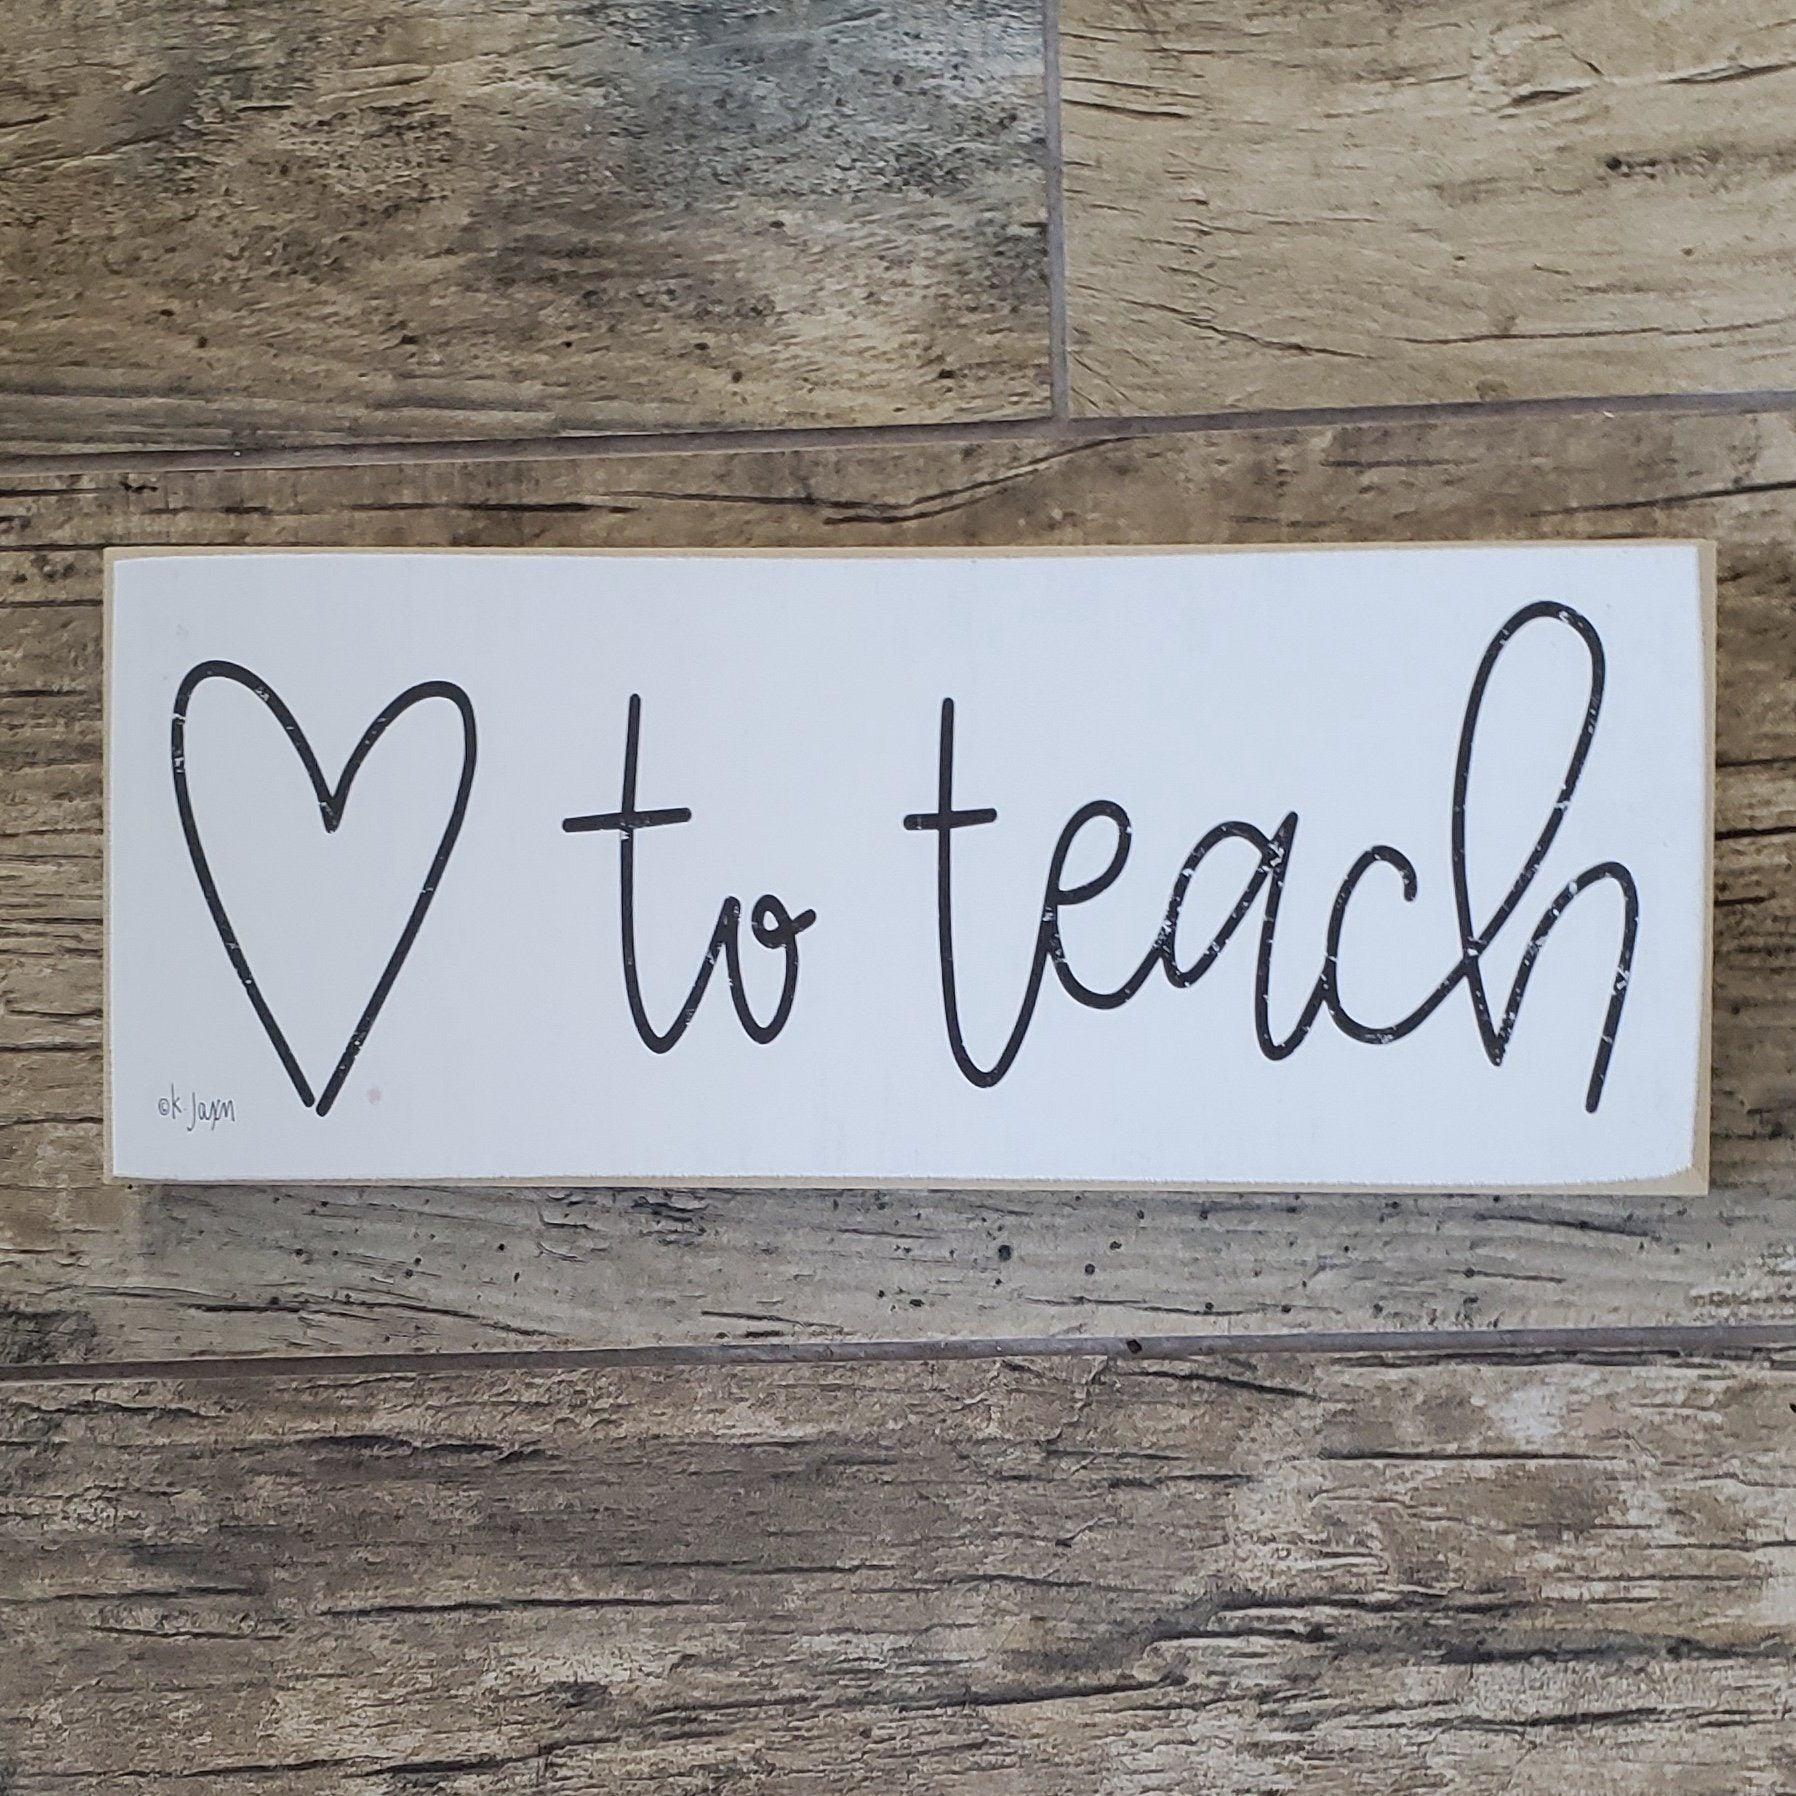 Teacher Gifts, Retirement Gift for Teachers - A Rustic Feeling